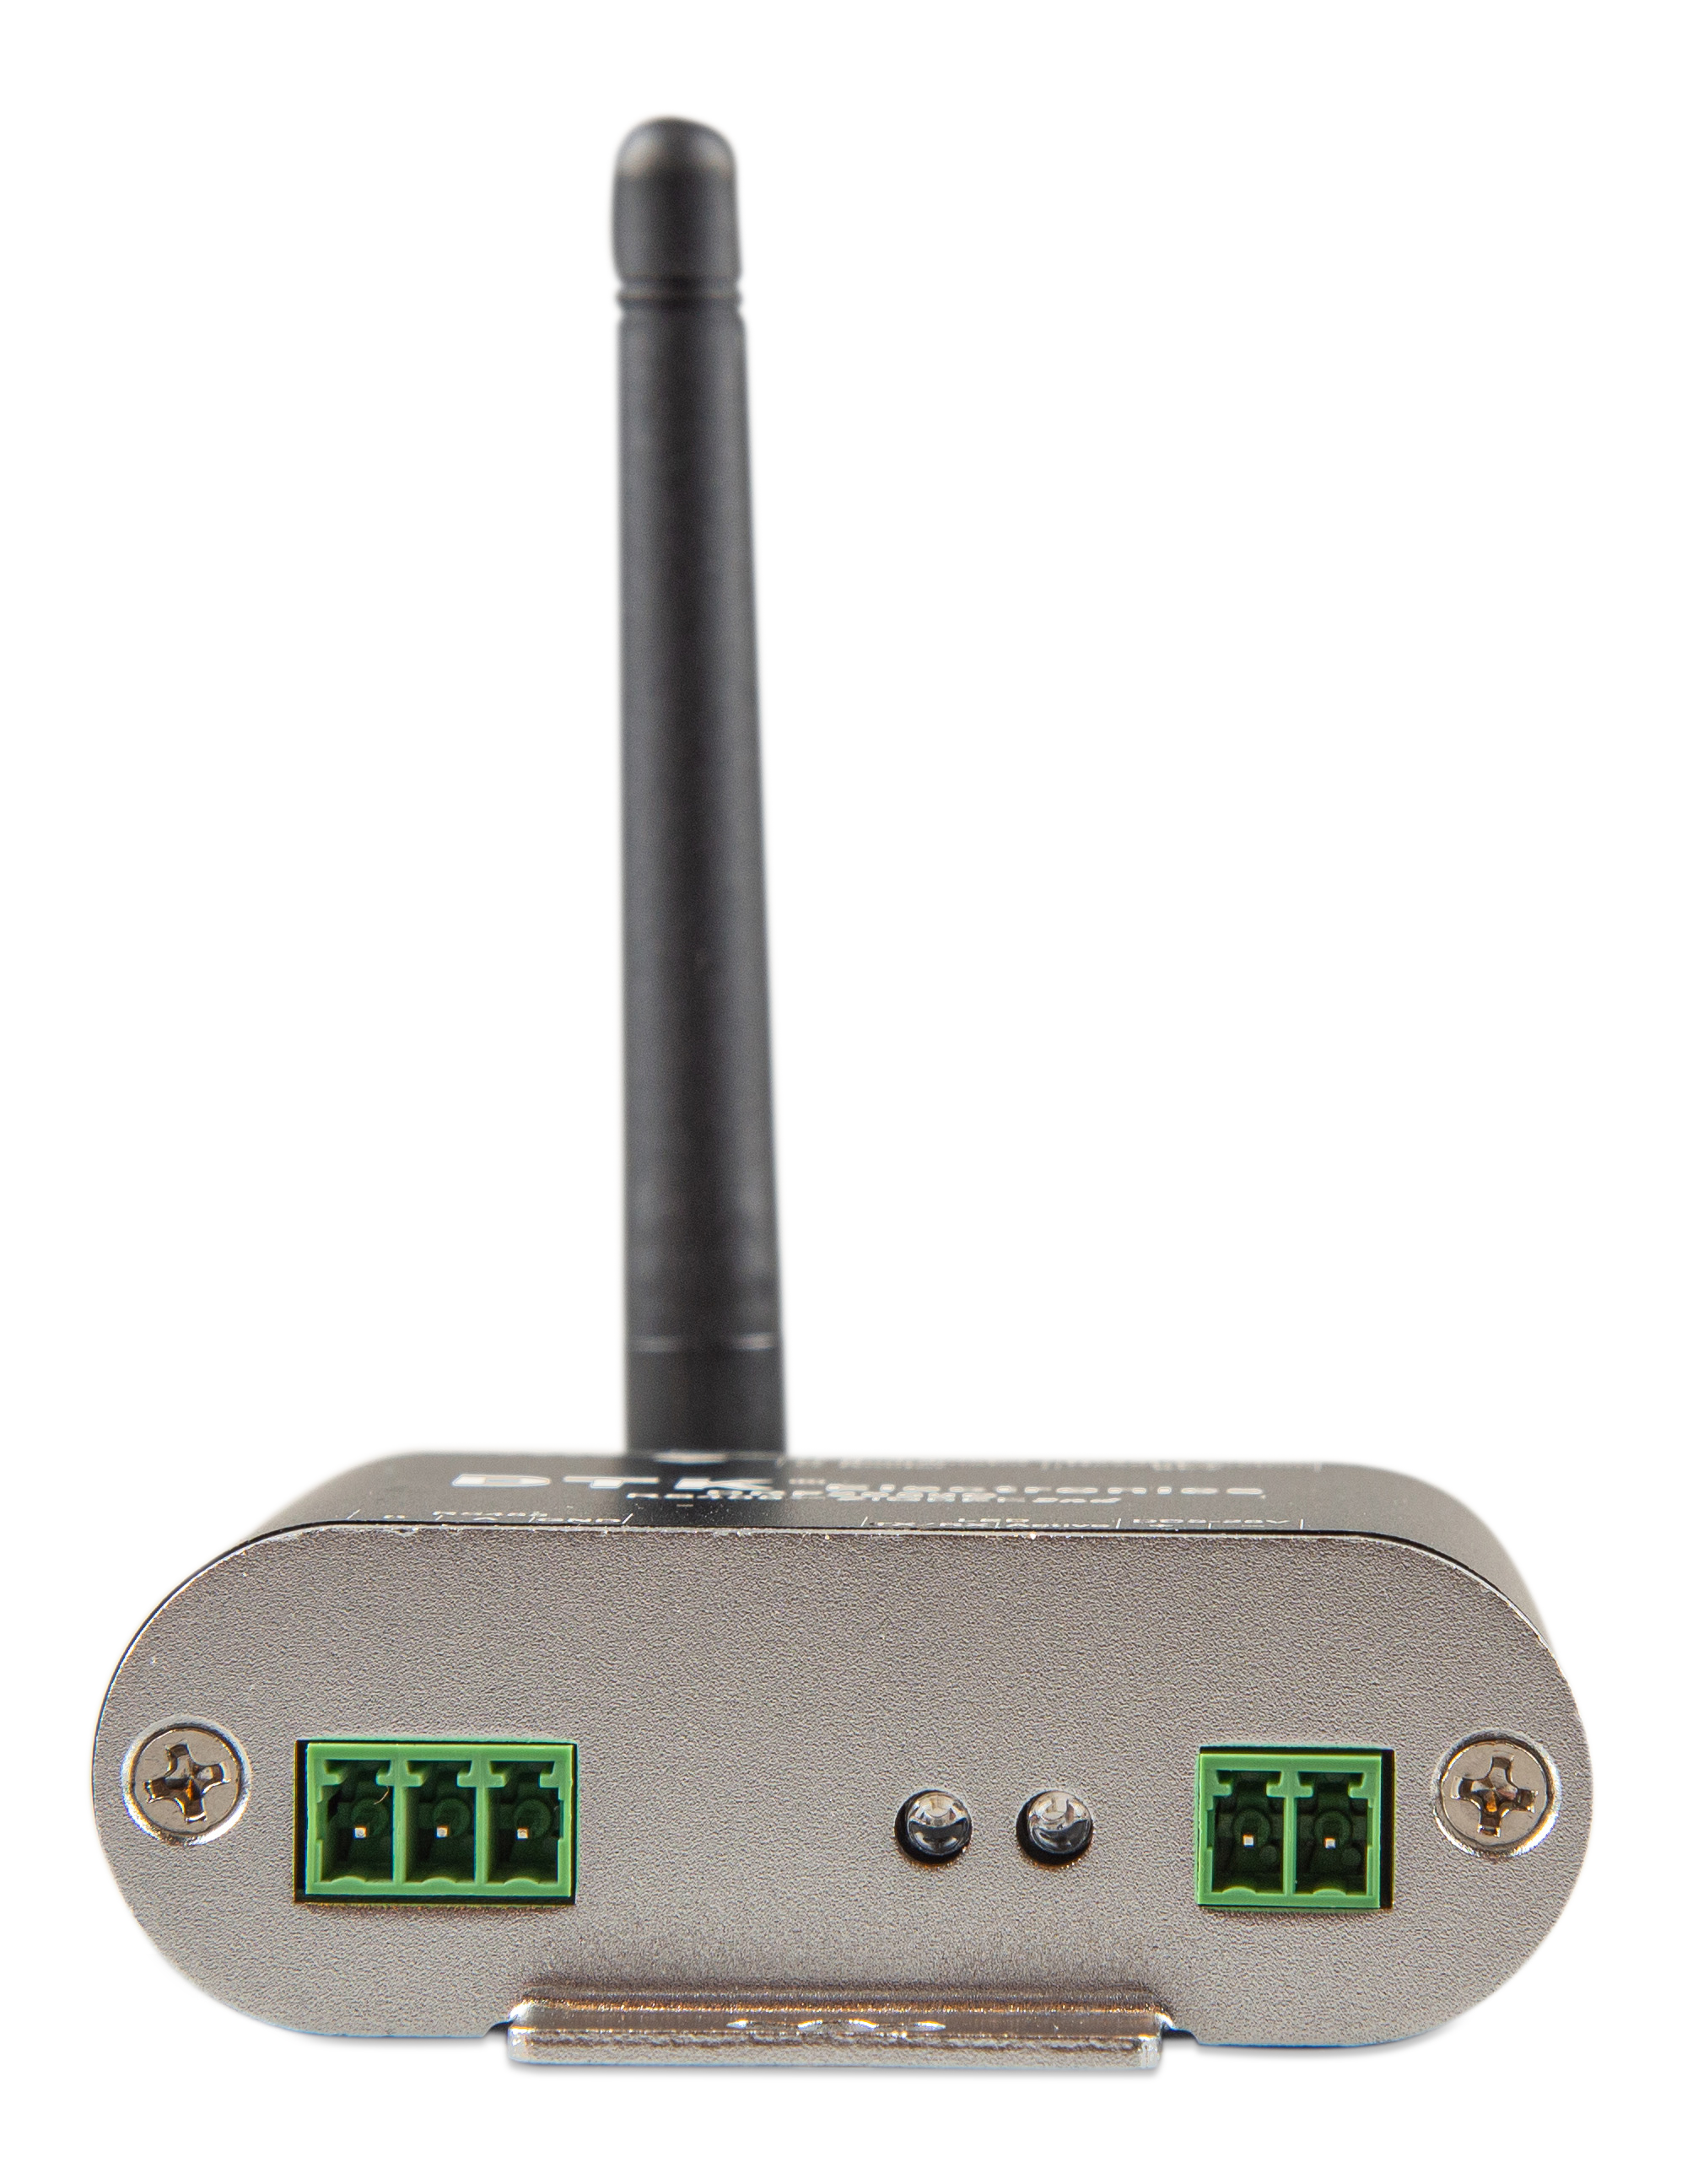 EKM 485Bee - Zigbee Wireless Node for RS-485 Mesh Network